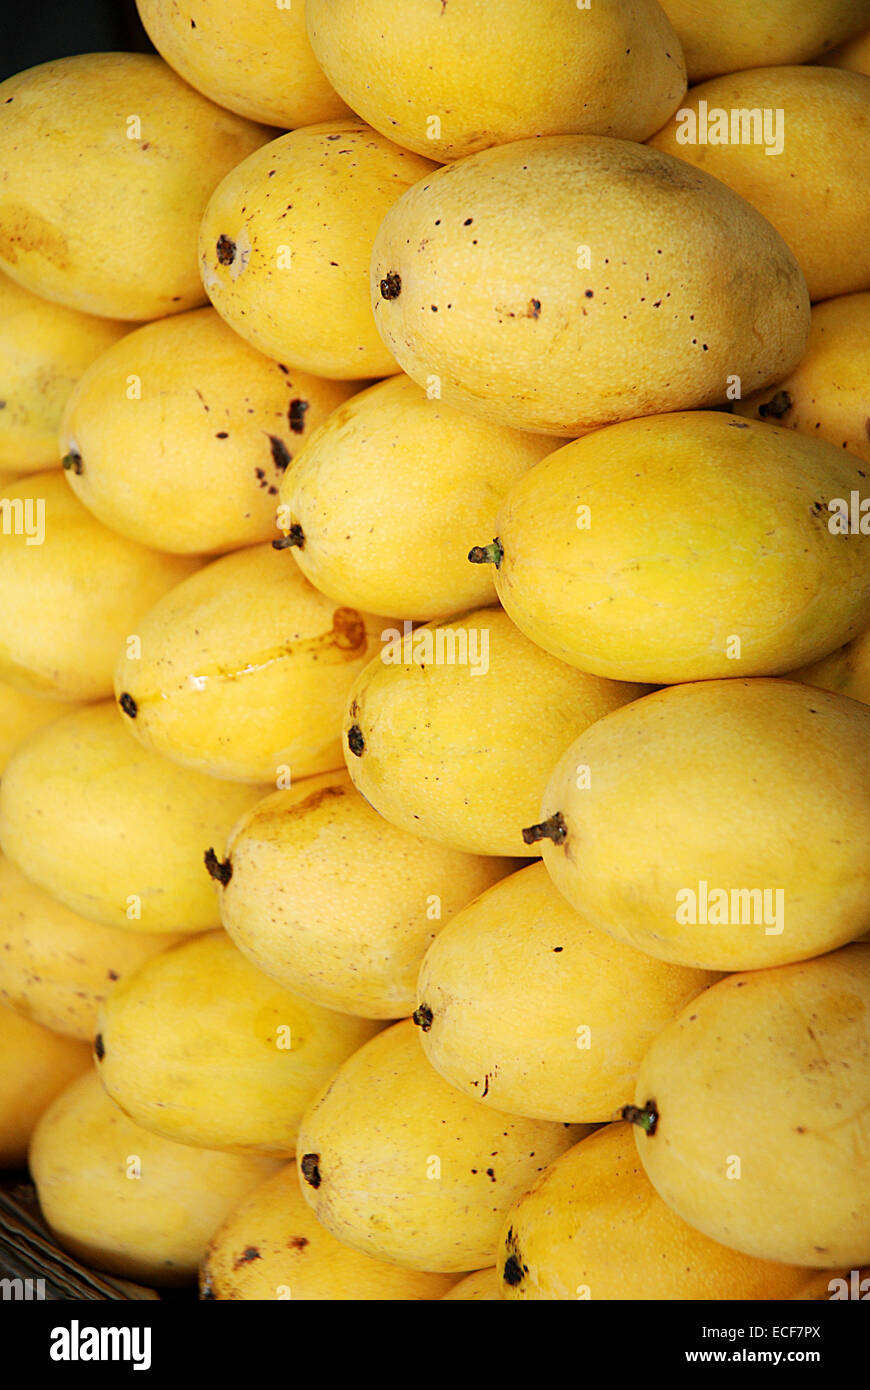 Philippine mangoes in market Stock Photo